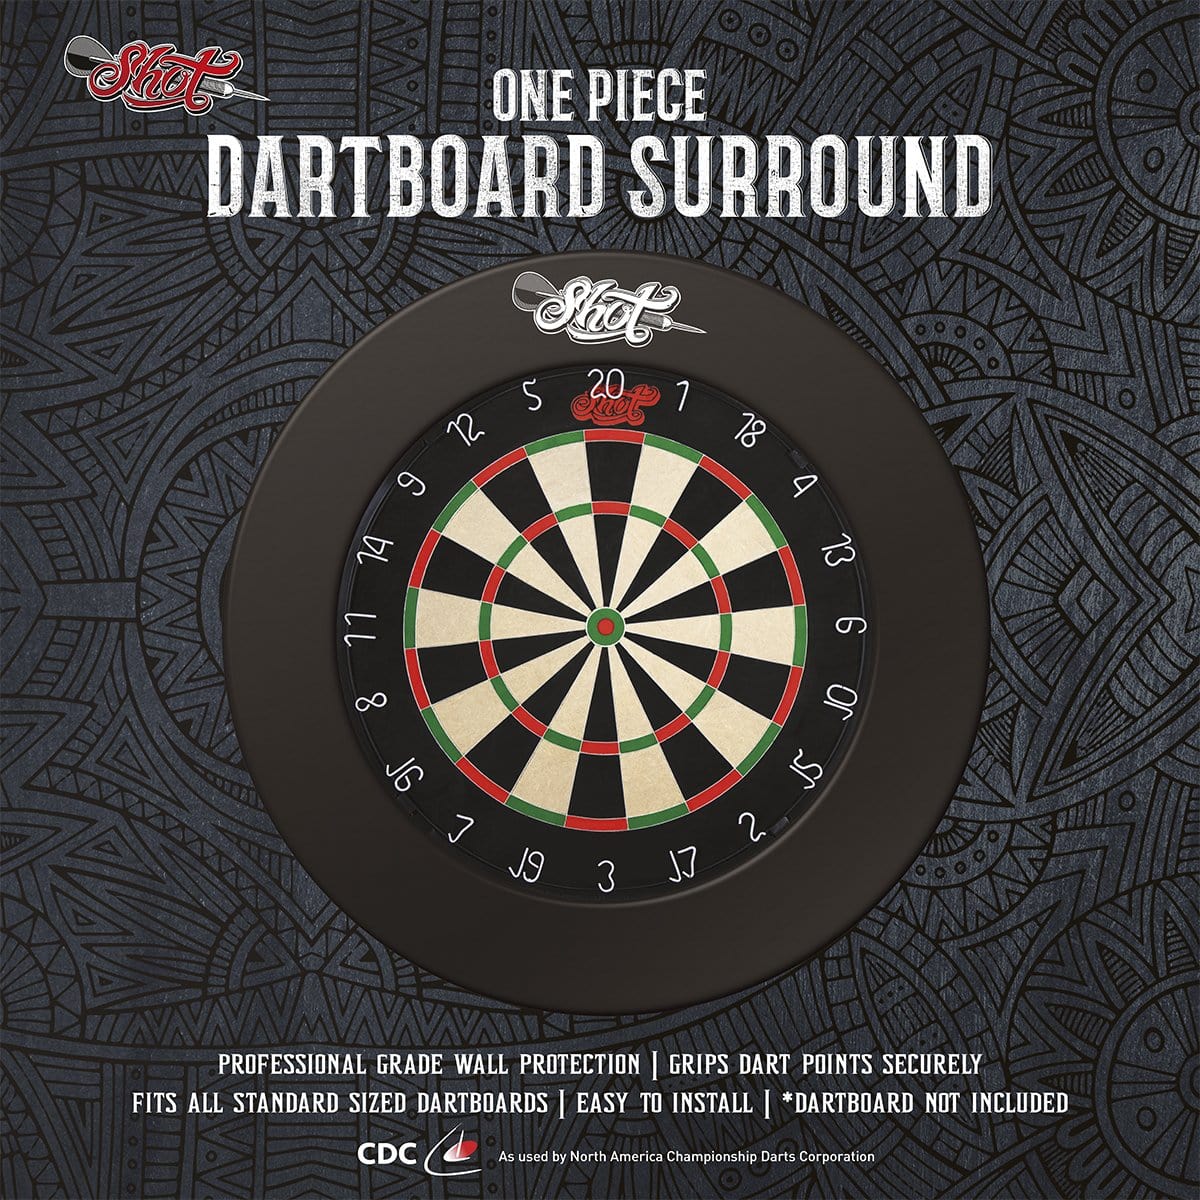 One Piece Dartboard Surround - Black